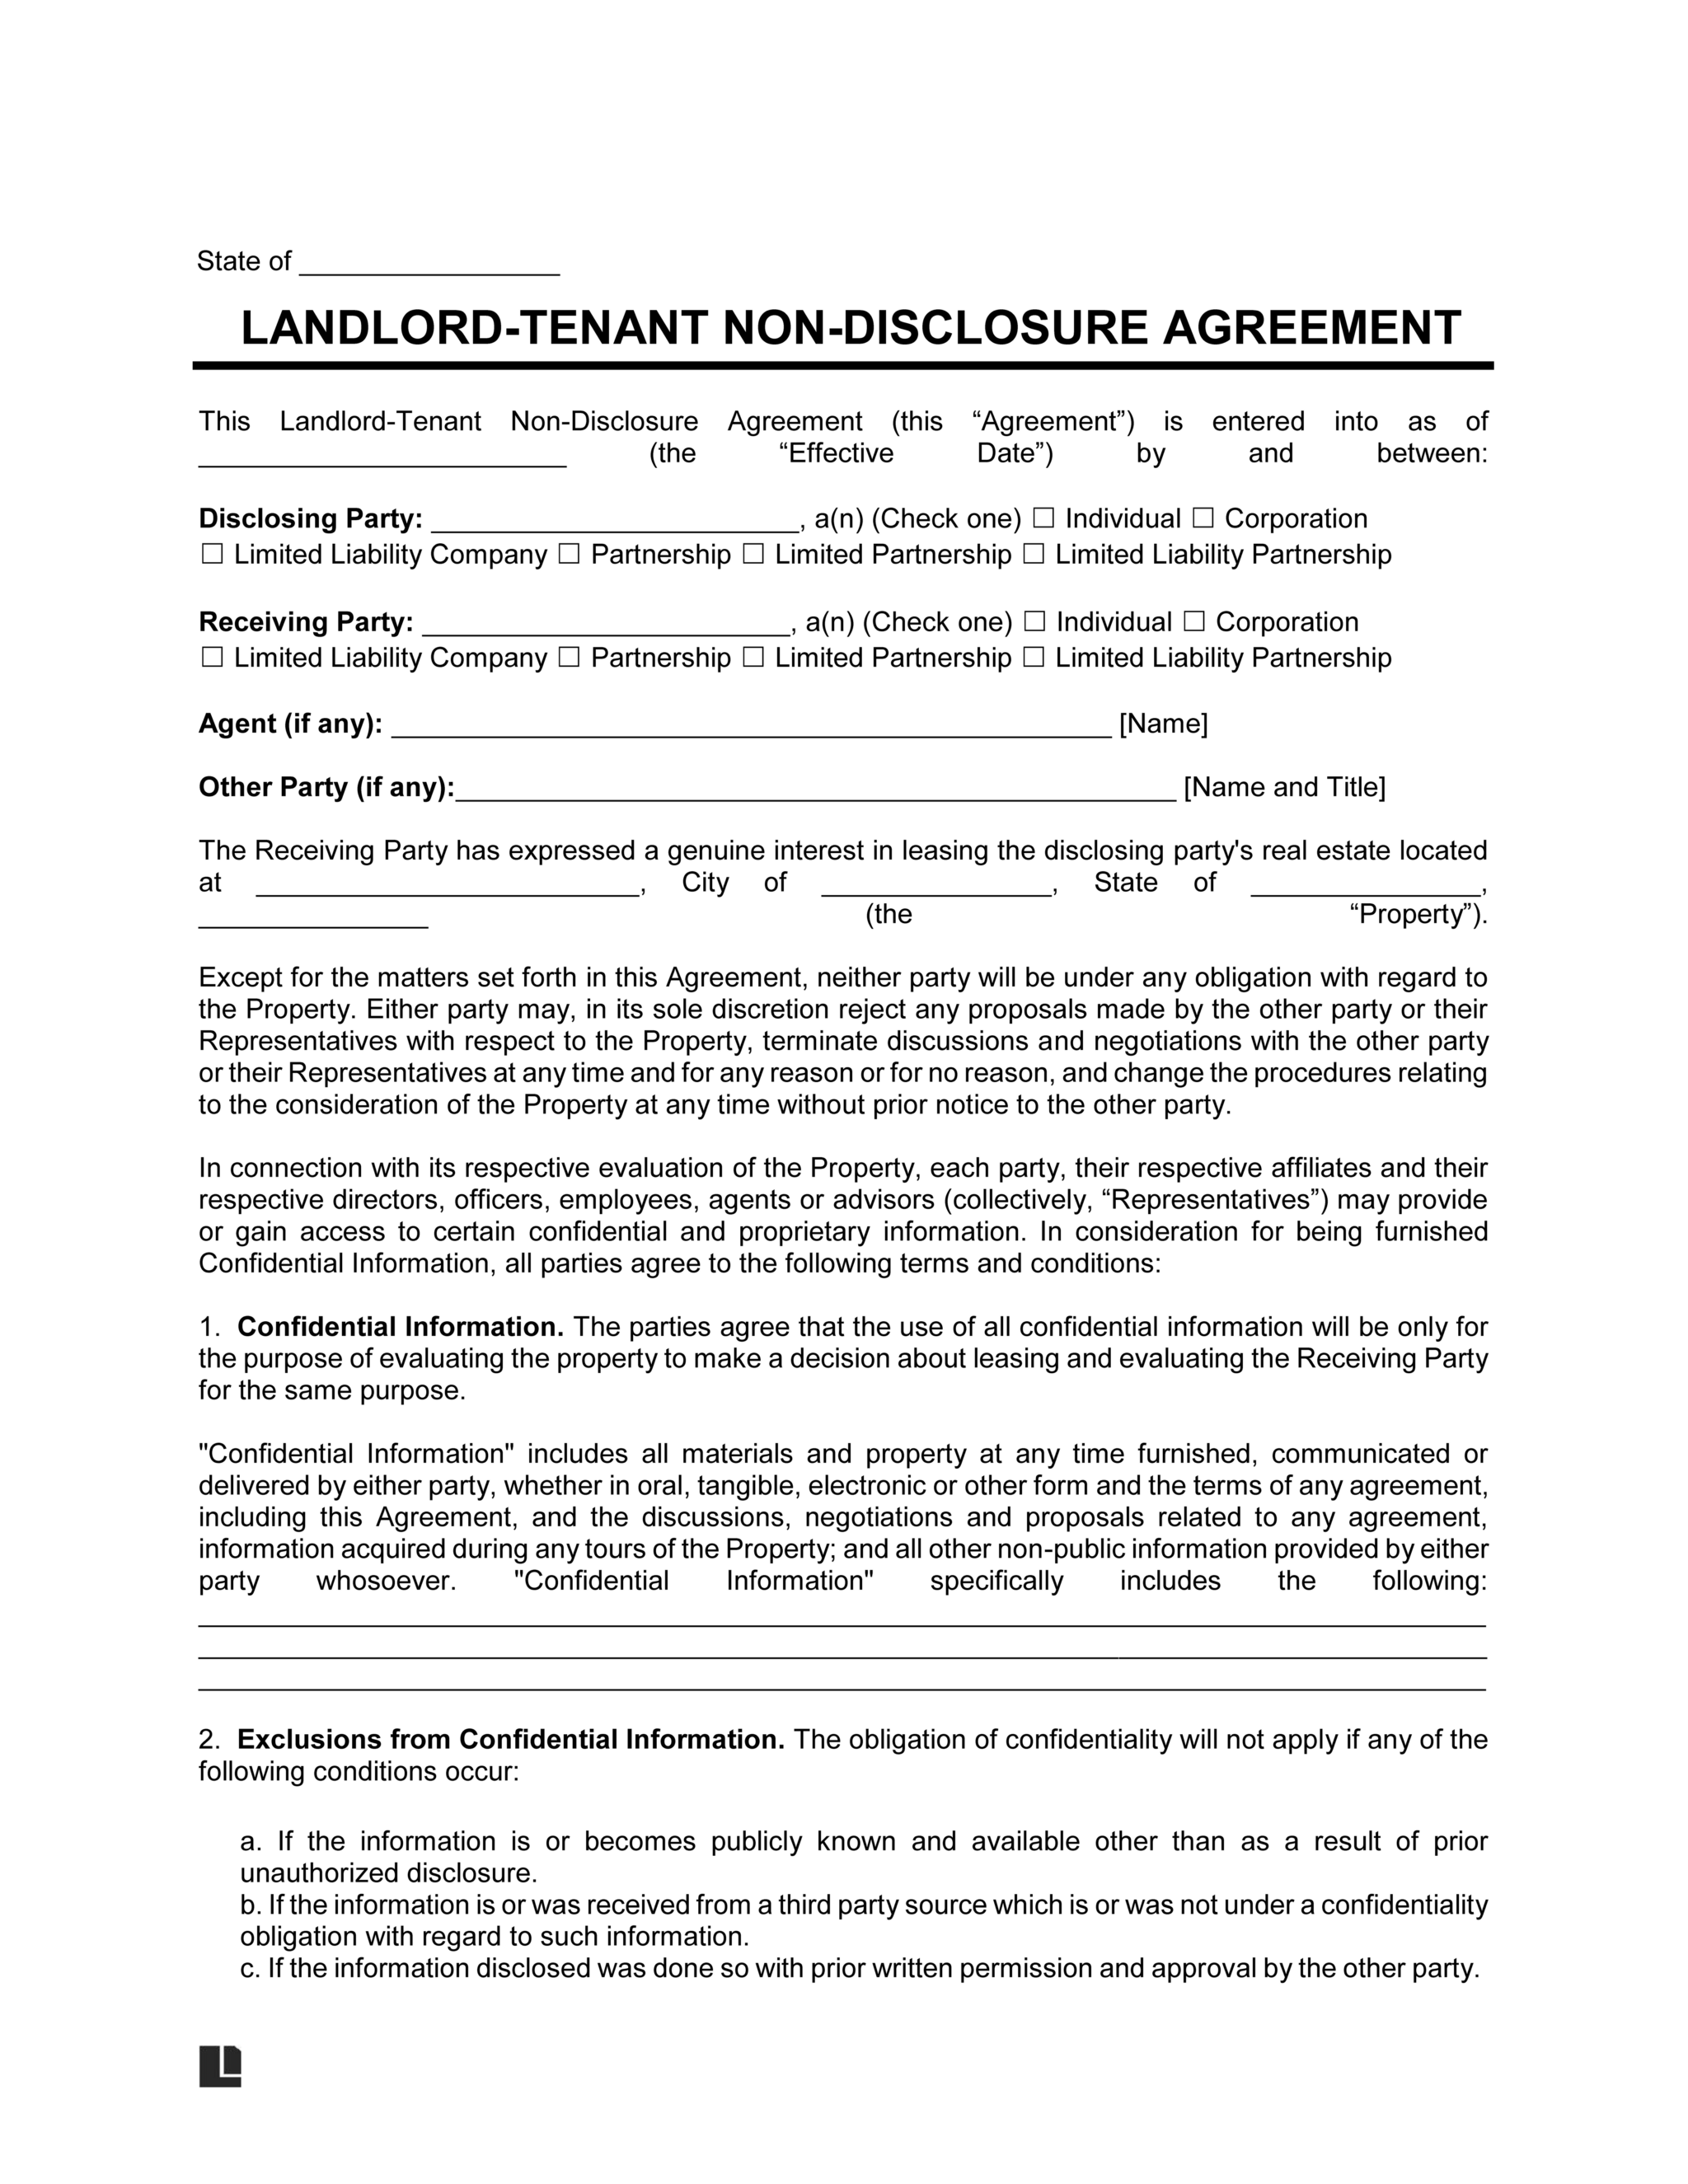 Landlord-Tenant Non-Disclosure Agreement